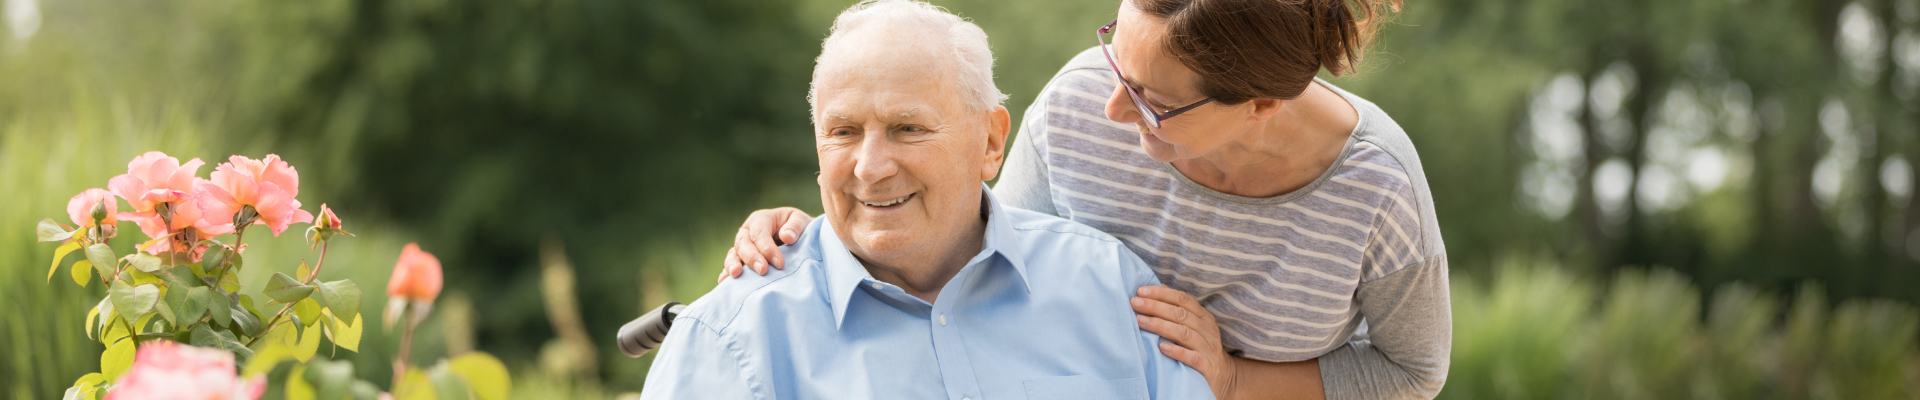 Caregiver helping senior man in wheelchair